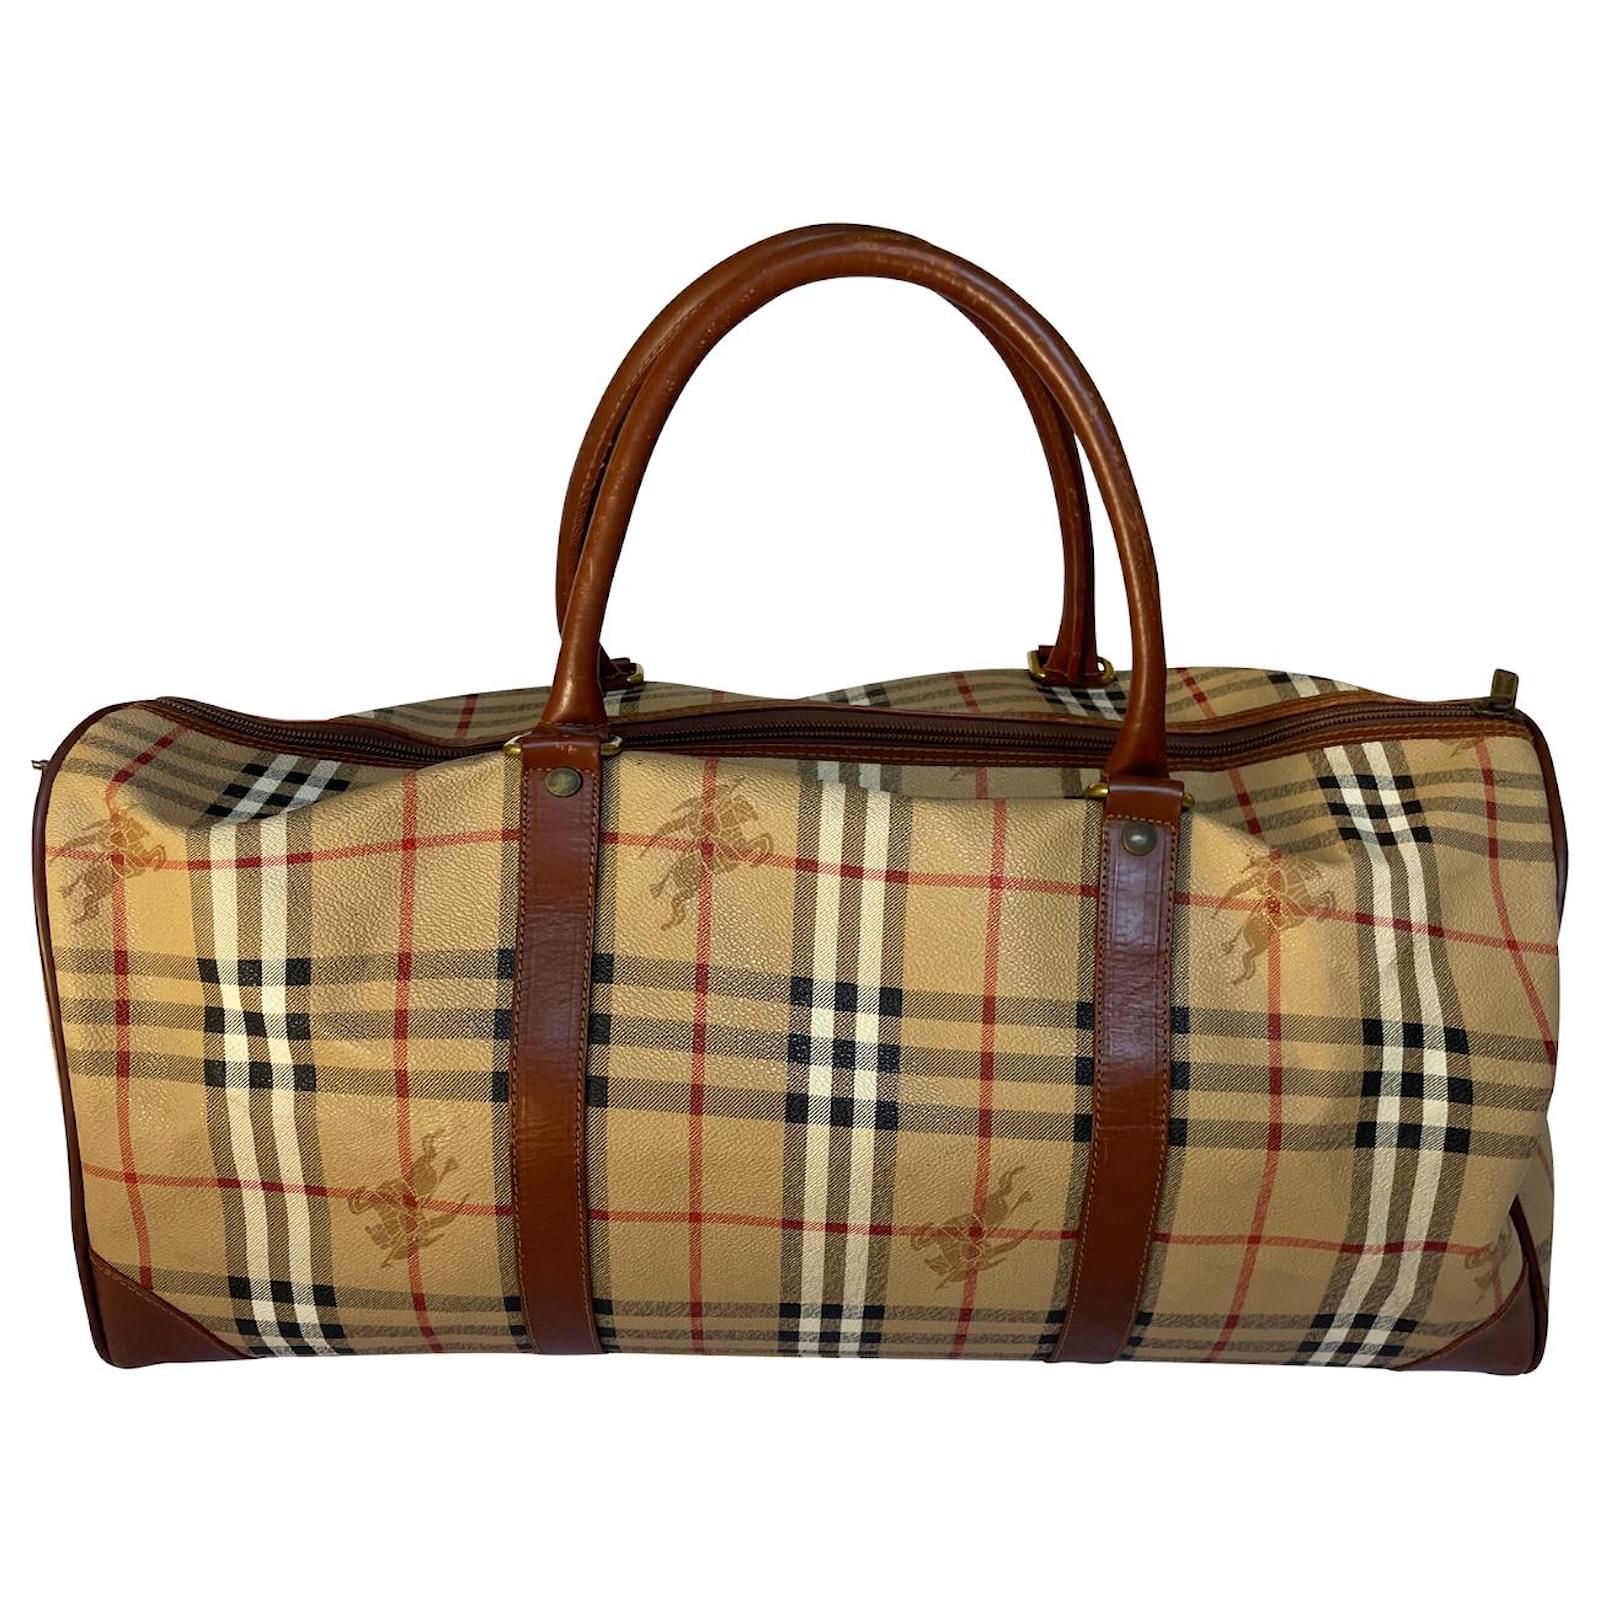 Authentic Vintage Burberry Nova Check Tote Handbag Multiple colors